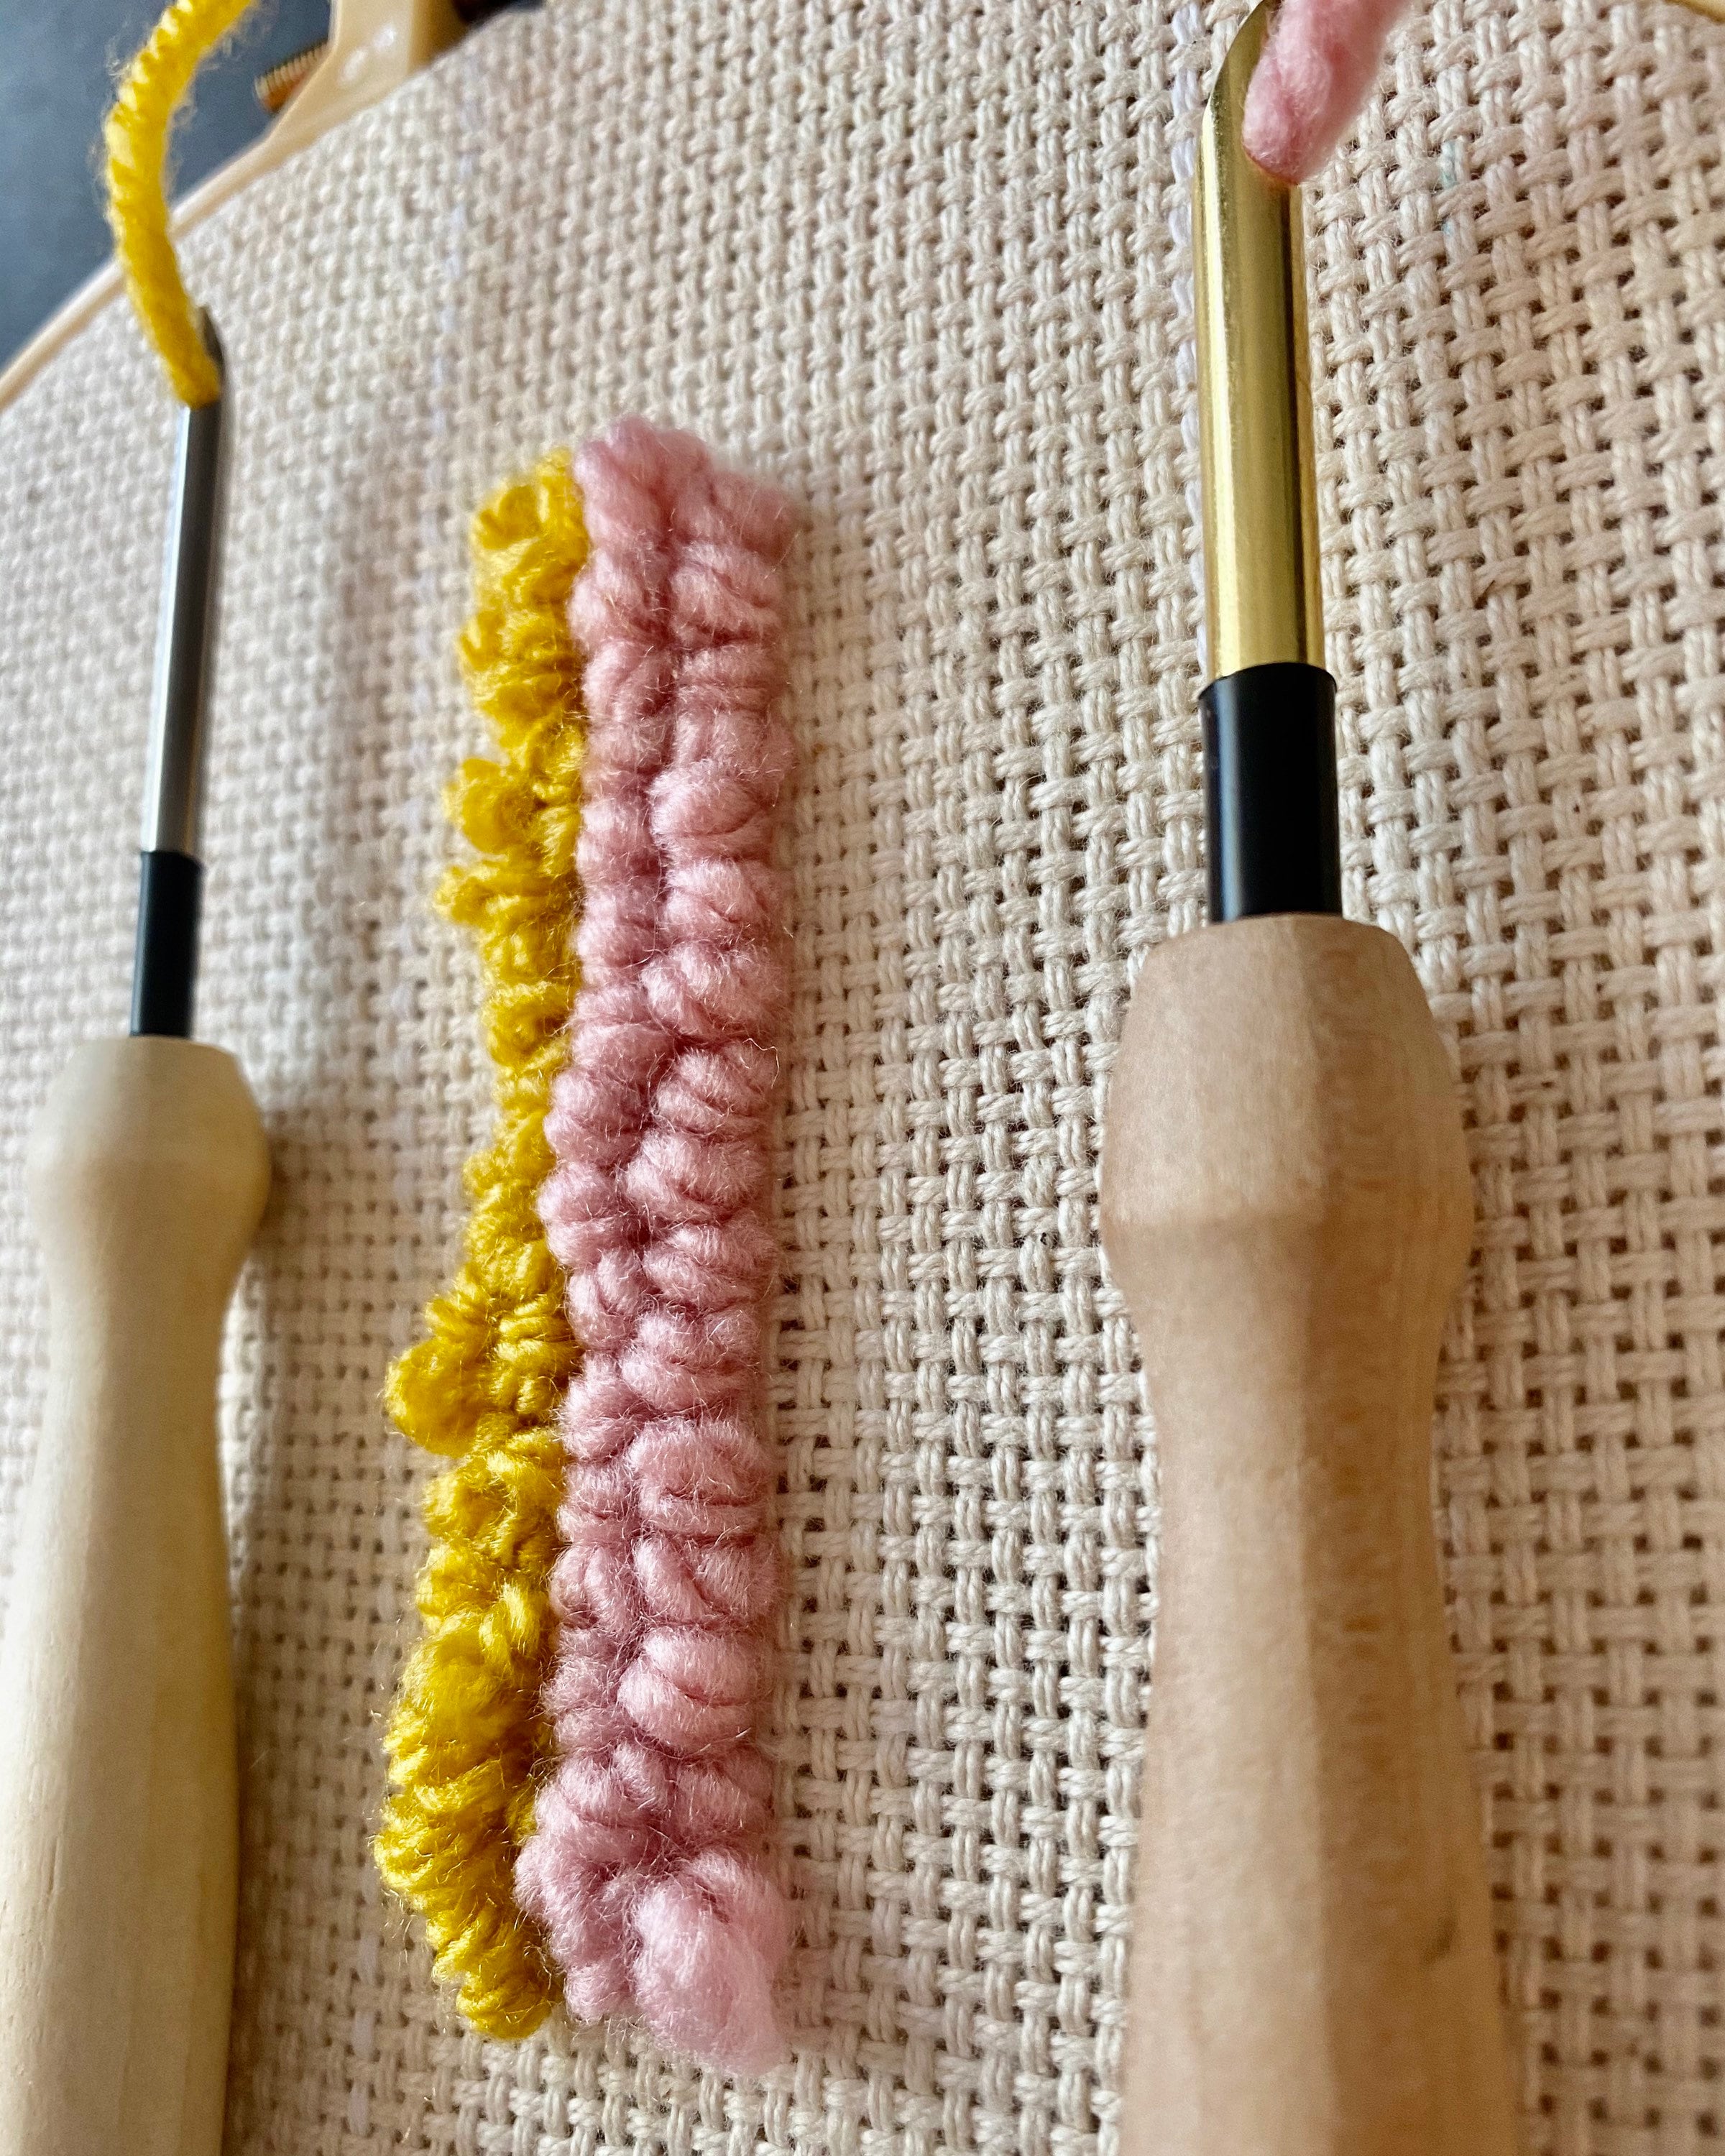  Oxford Wood Punch Needle Rug Hooking Tool #10 1/4